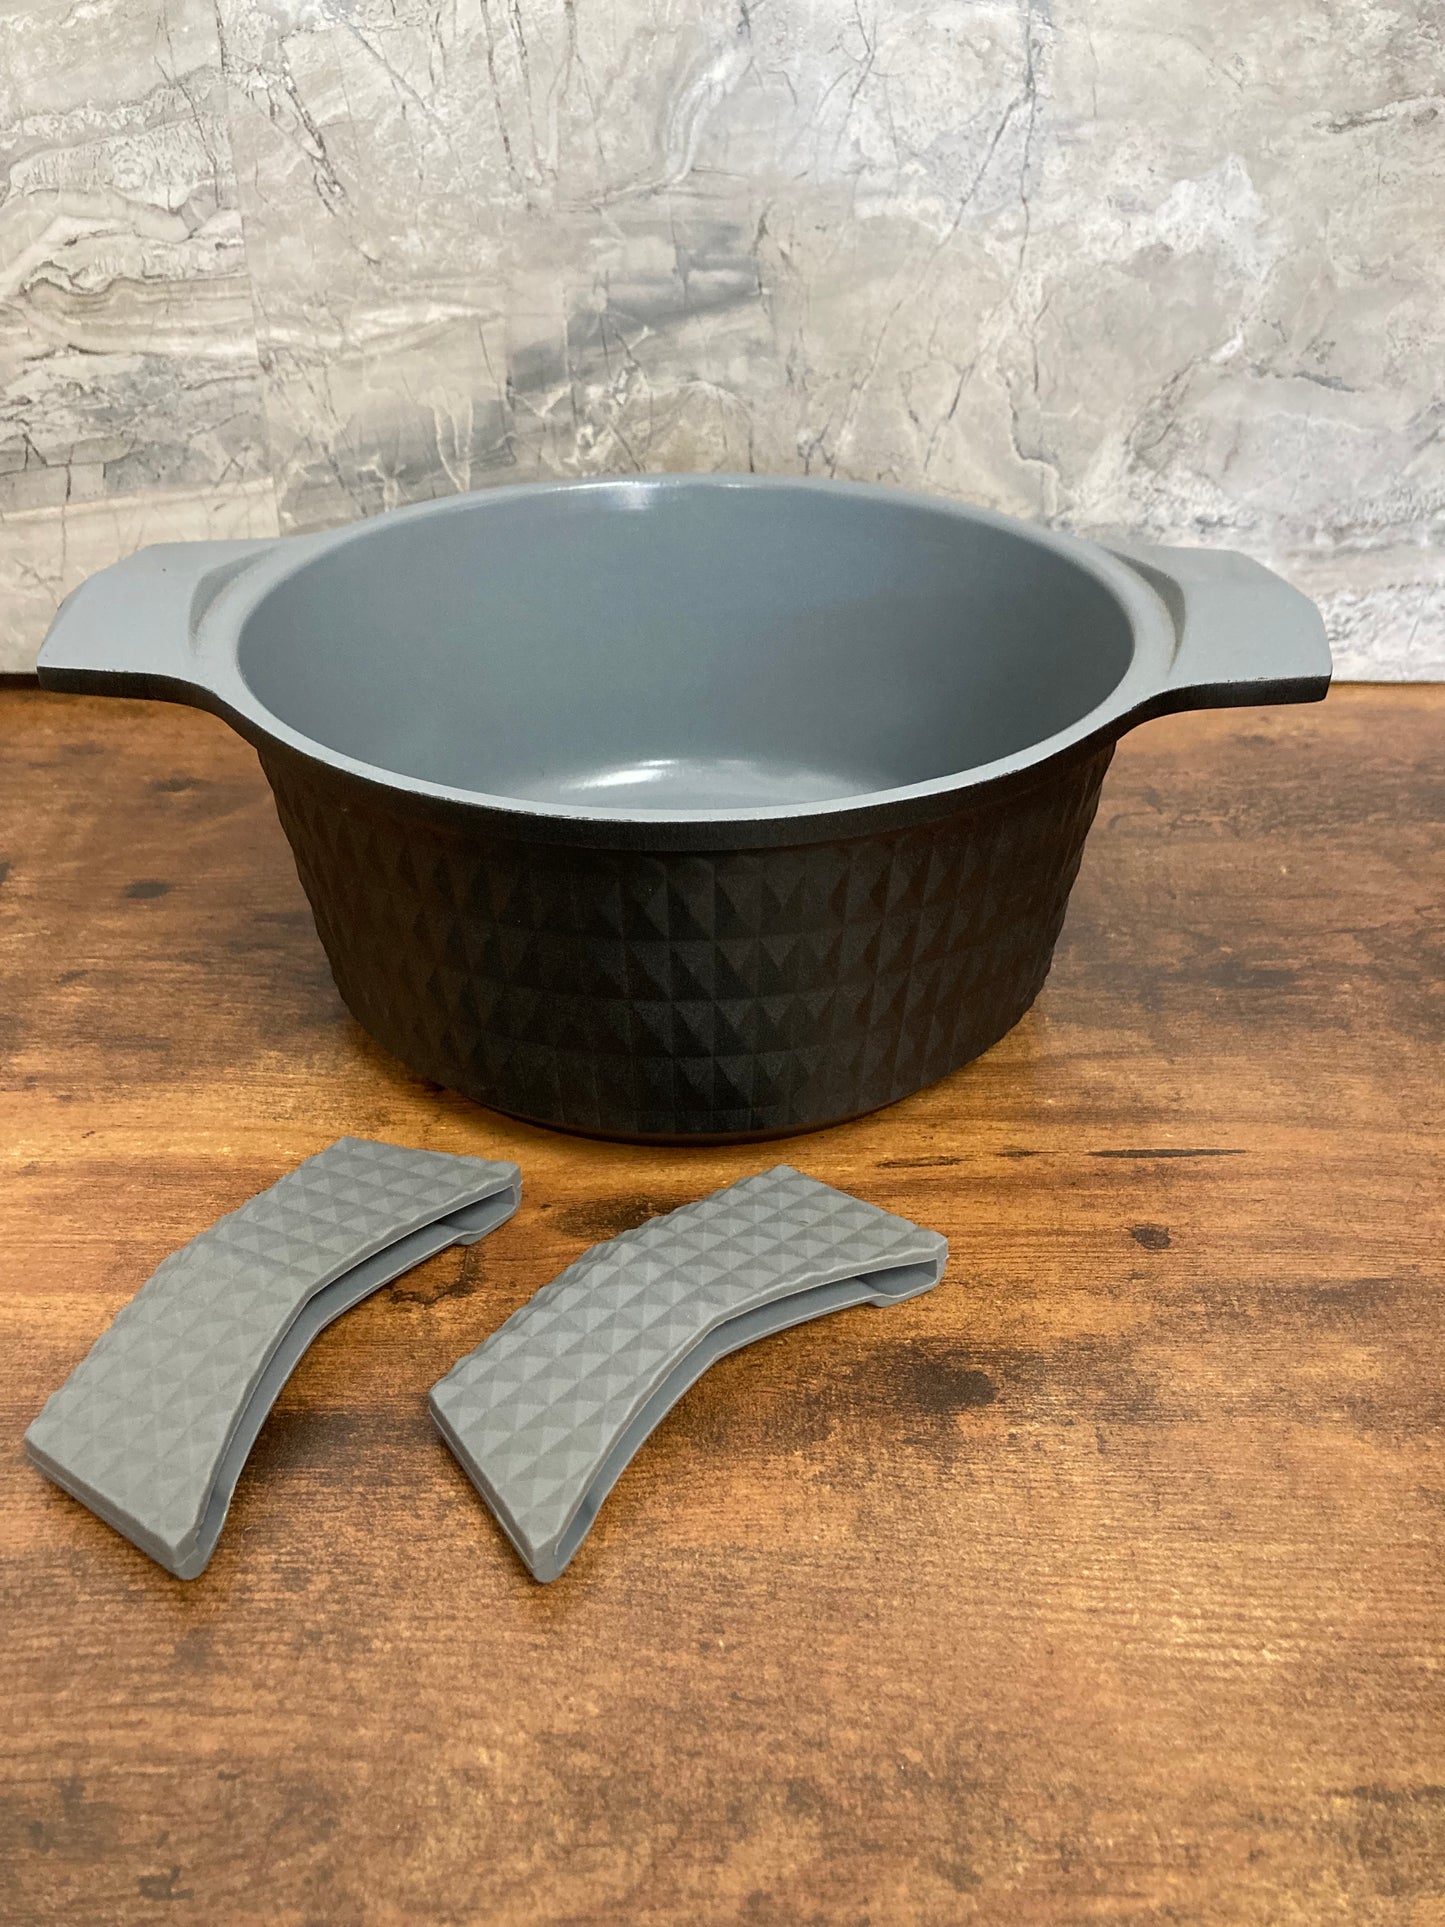 Black Cooking Pot 20 cm( approx 3QT) Cast Aluminum Stock pot ,Non Stick Ceramic Coated 0% PTFE 0% PFOA Kitchen stove oven.